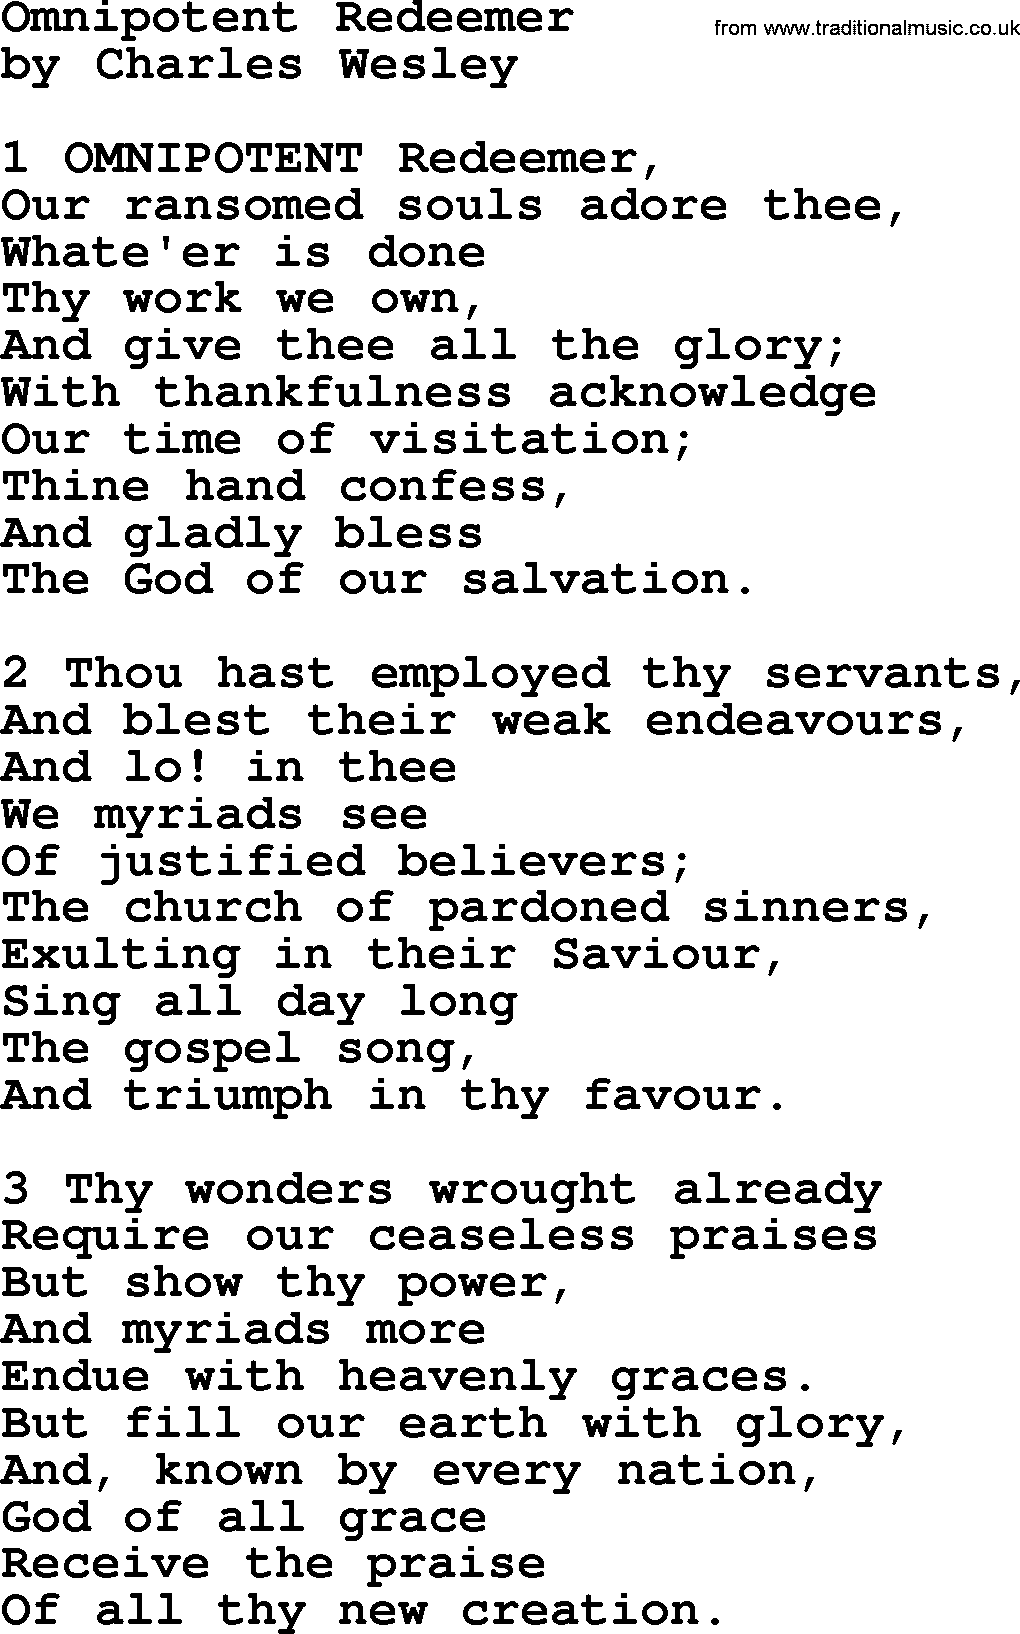 Charles Wesley hymn: Omnipotent Redeemer, lyrics